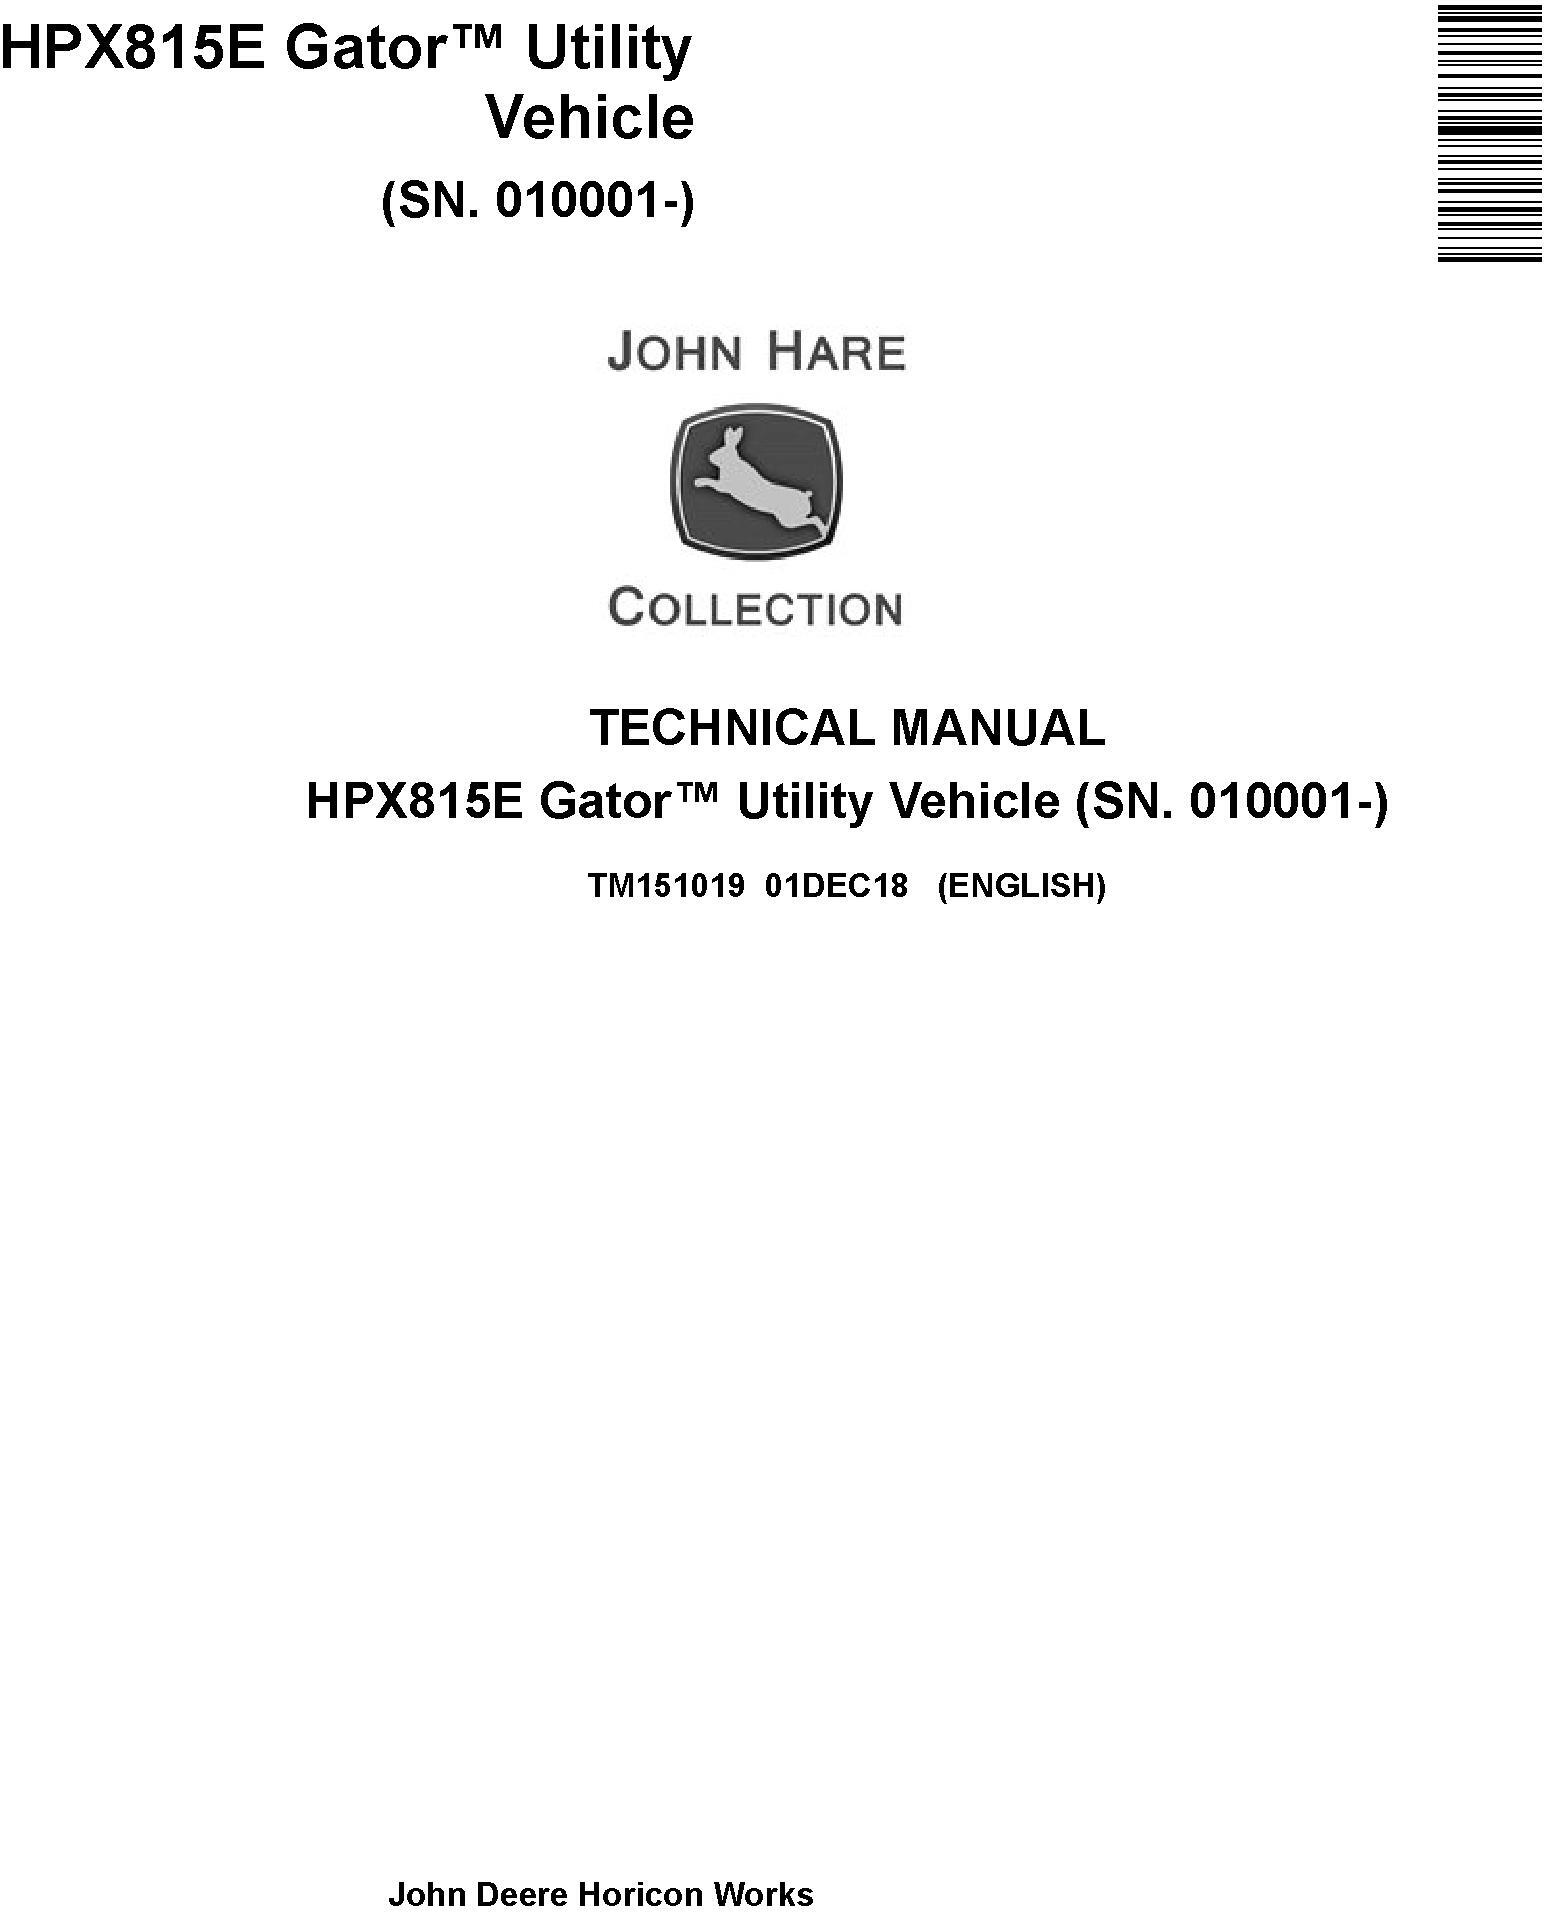 John Deere HPX815E Gator Utility Vehicle (SN. 010001-) Technical Service Manual (TM151019)